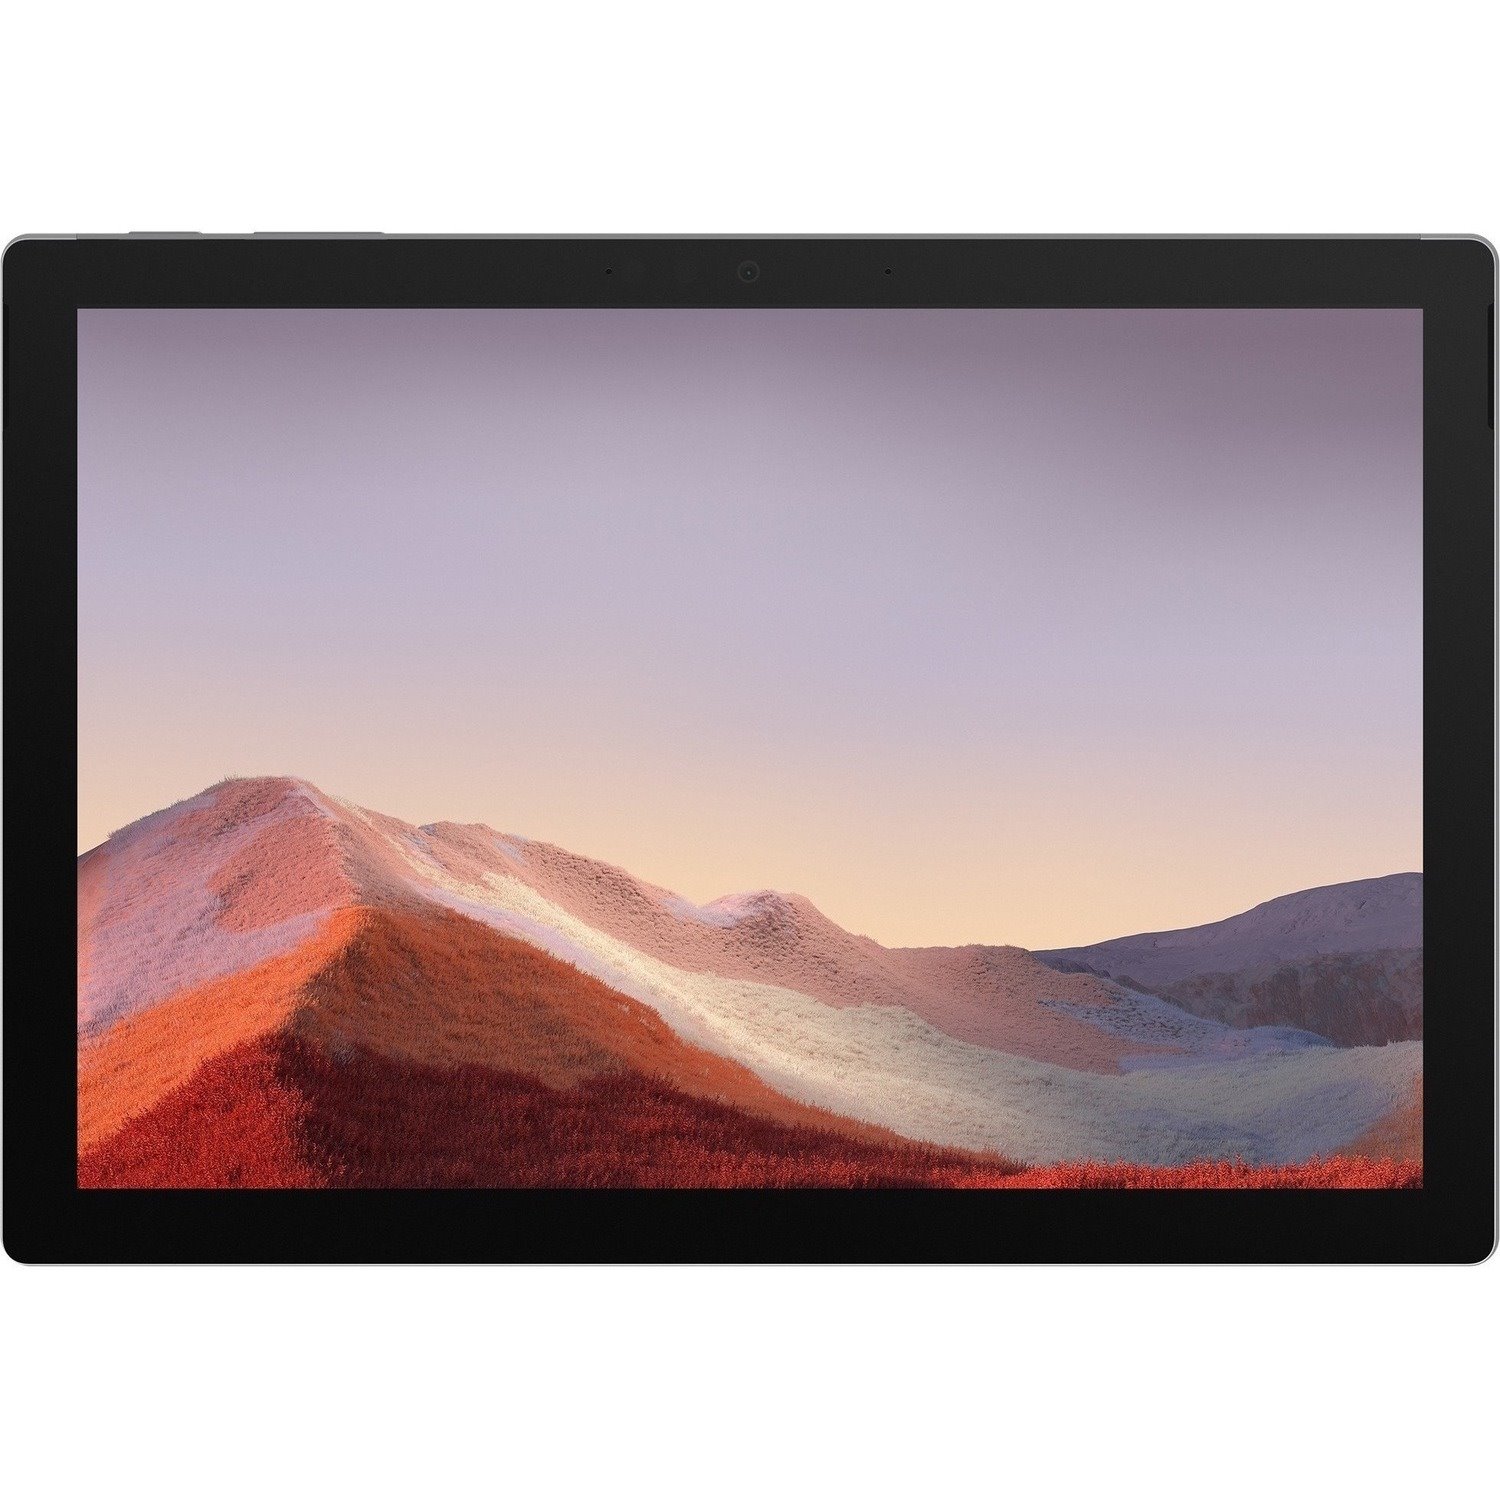 Buy Microsoft Surface Pro 7 Tablet 31 2 Cm 12 3 Core I5 11th Gen I5 1135g7 Quad Core 4 Core 2 40 Ghz 8 Gb Ram 128 Gb Ssd Windows 10 Pro 4g Platinum Techcircuit Shop